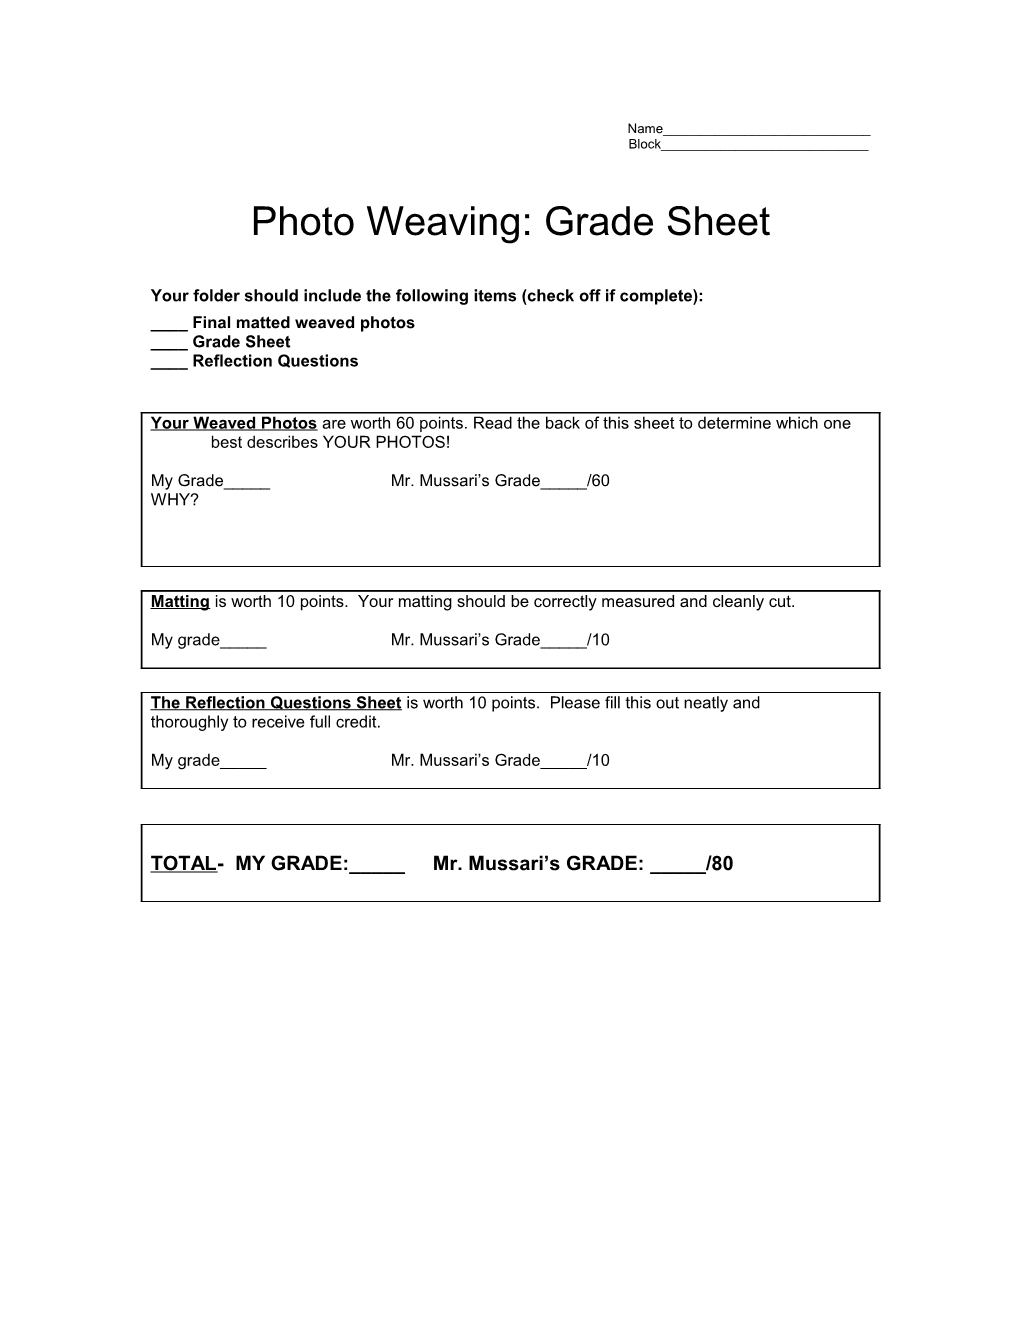 Photo Weaving: Grade Sheet